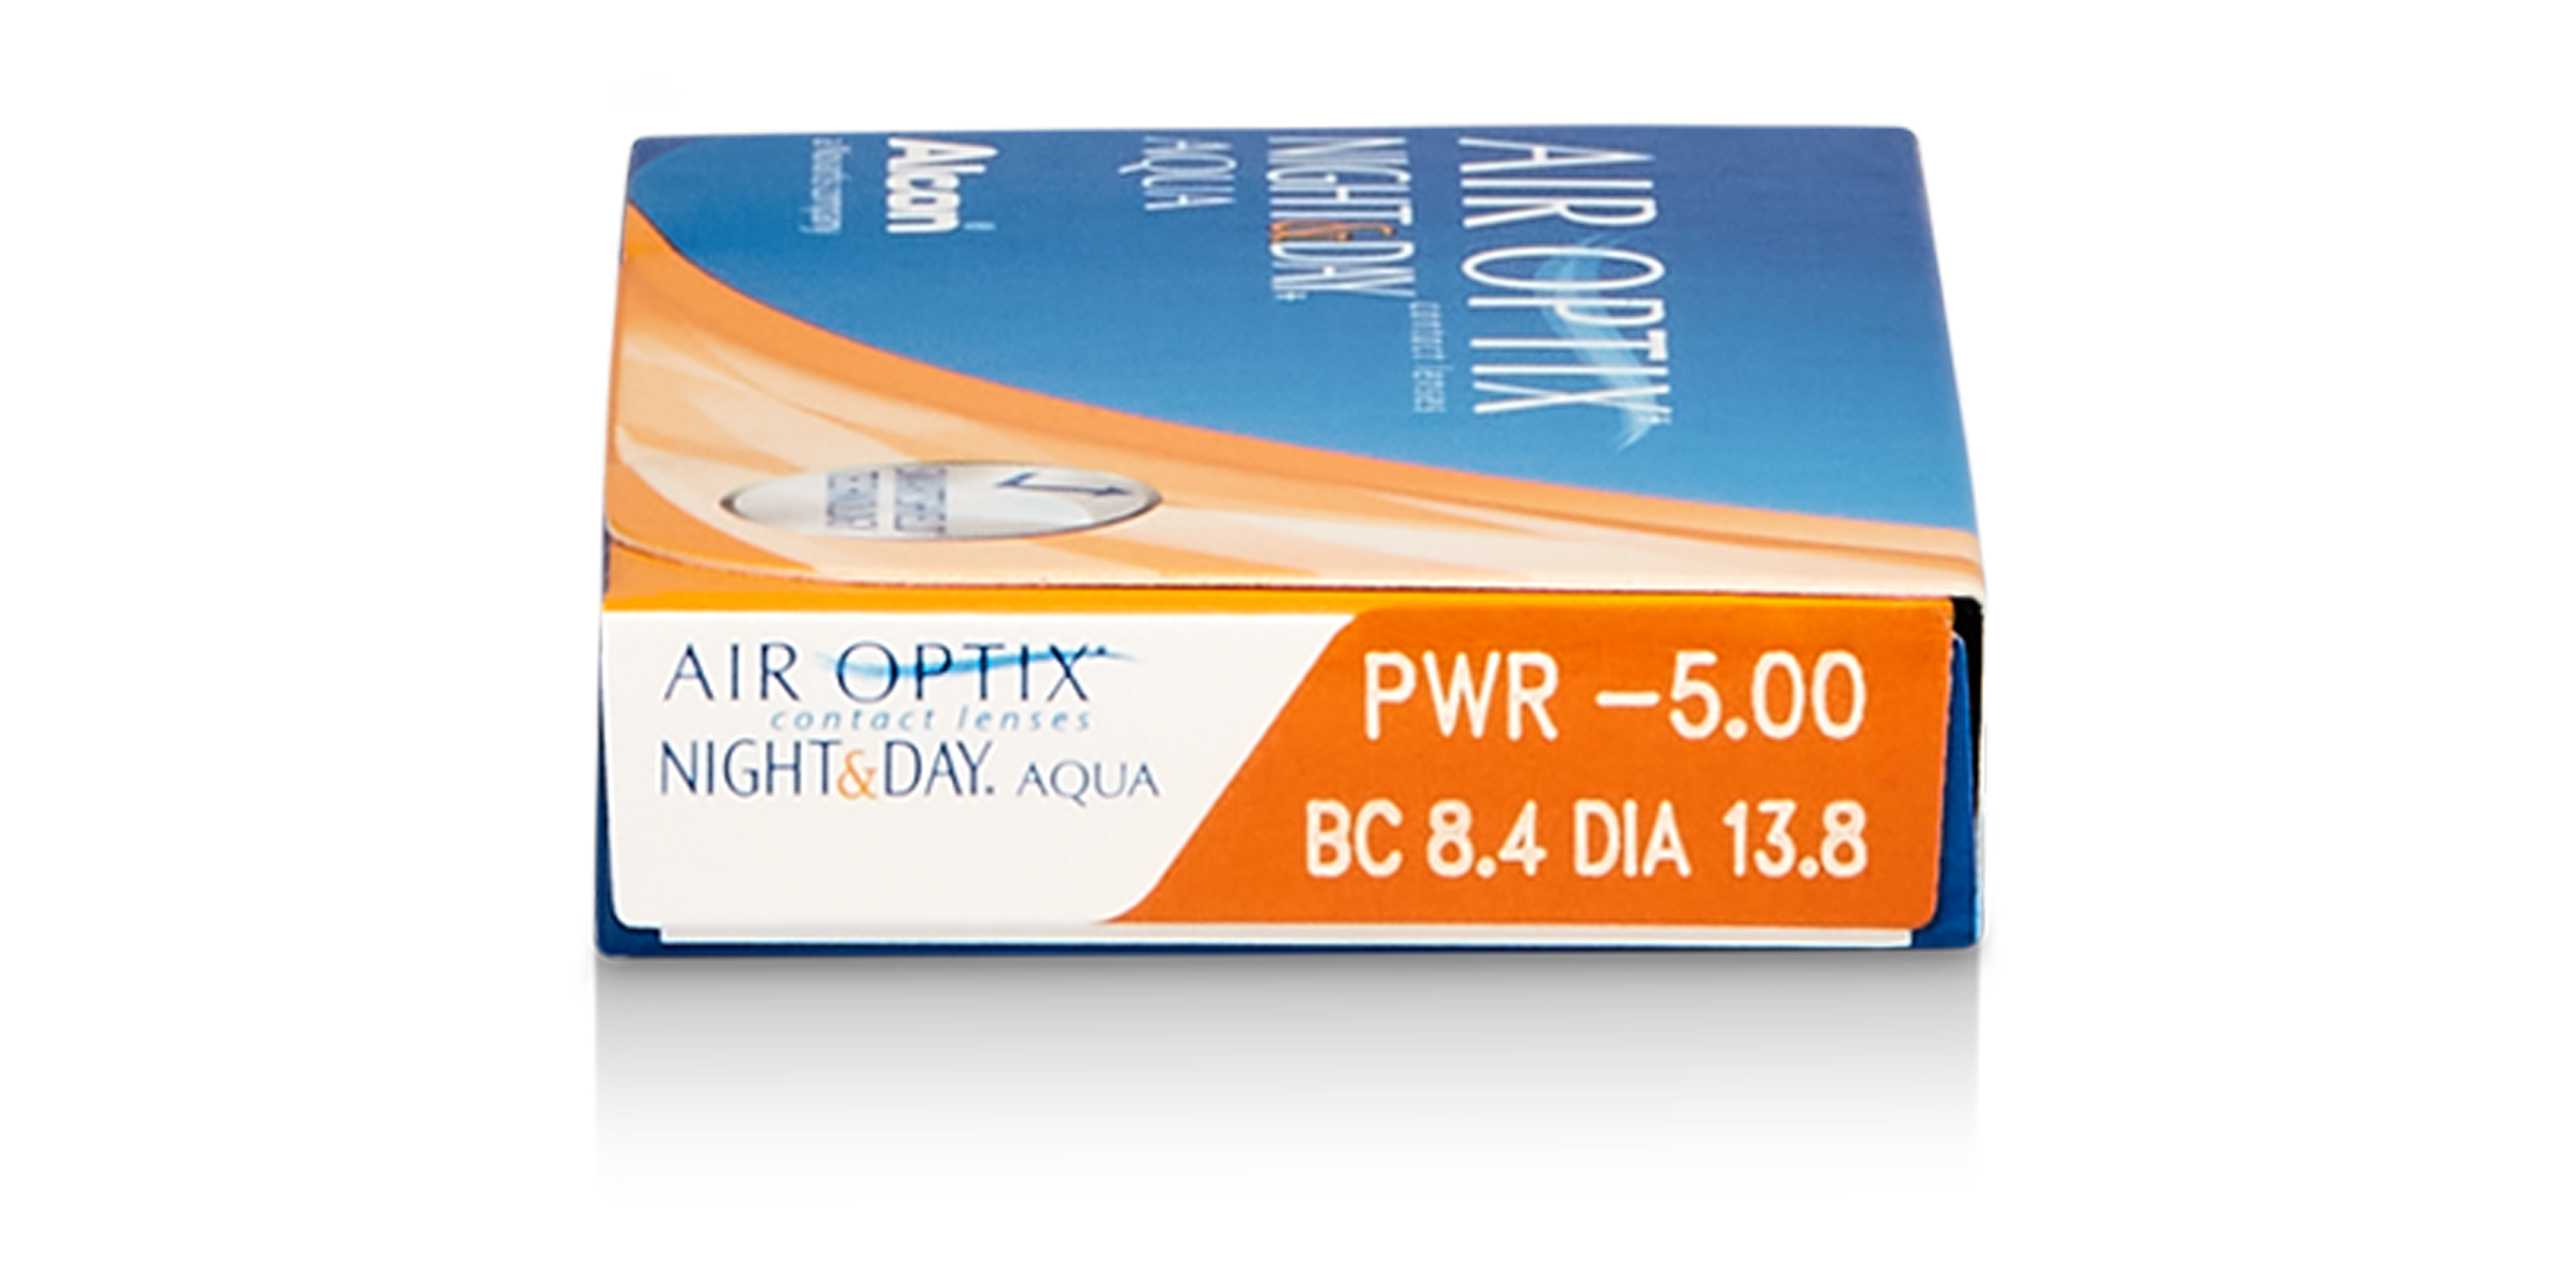 AIR OPTIX  NIGHT & DAY AQUA 6PK